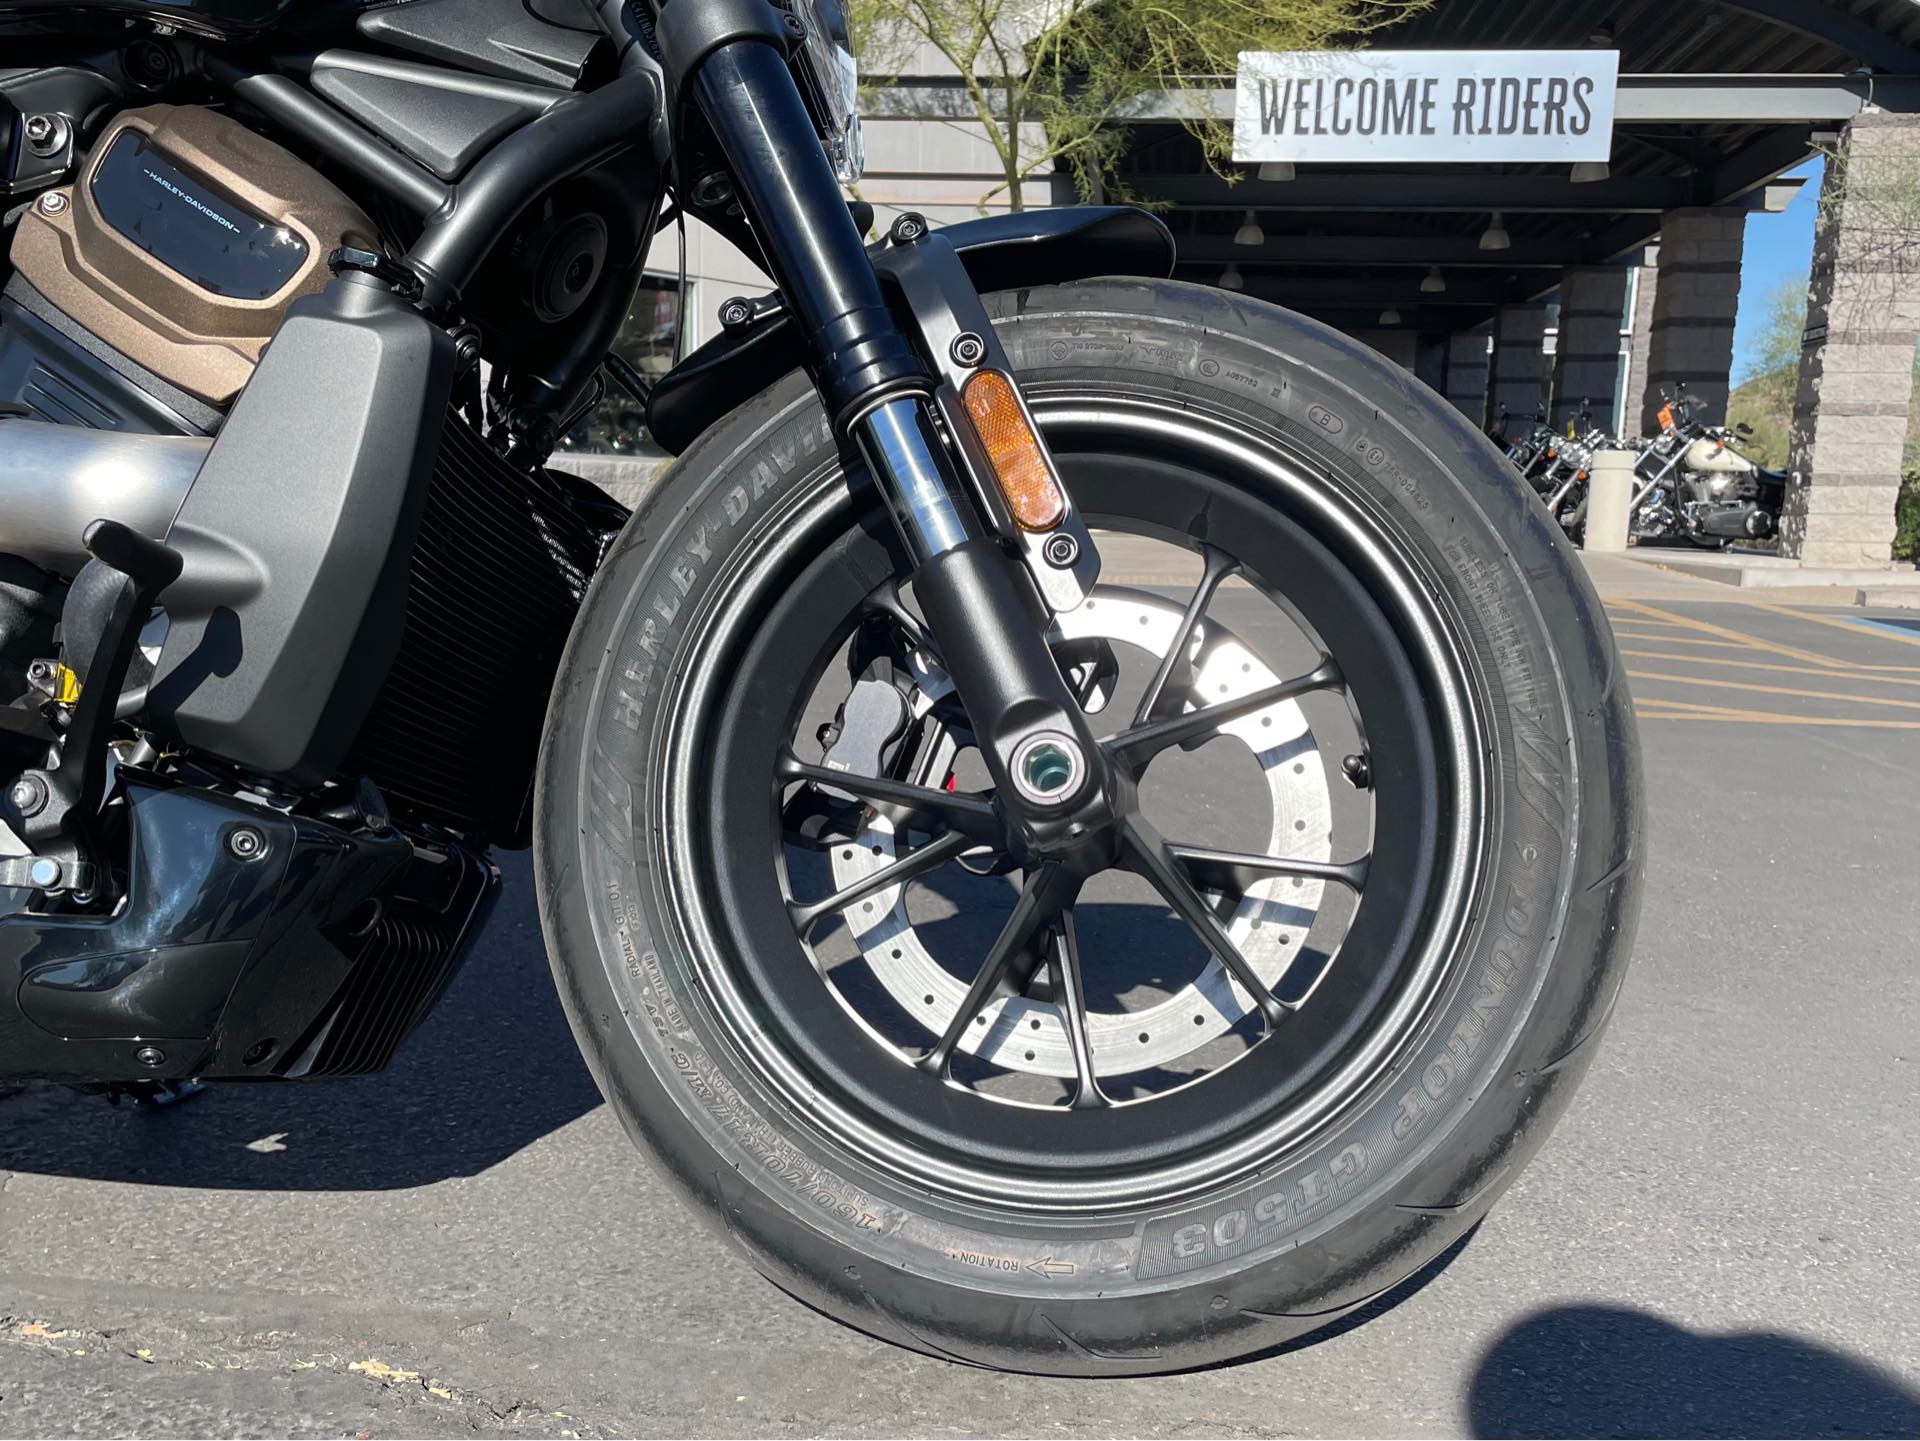 2022 Harley-Davidson Sportster S at Buddy Stubbs Arizona Harley-Davidson